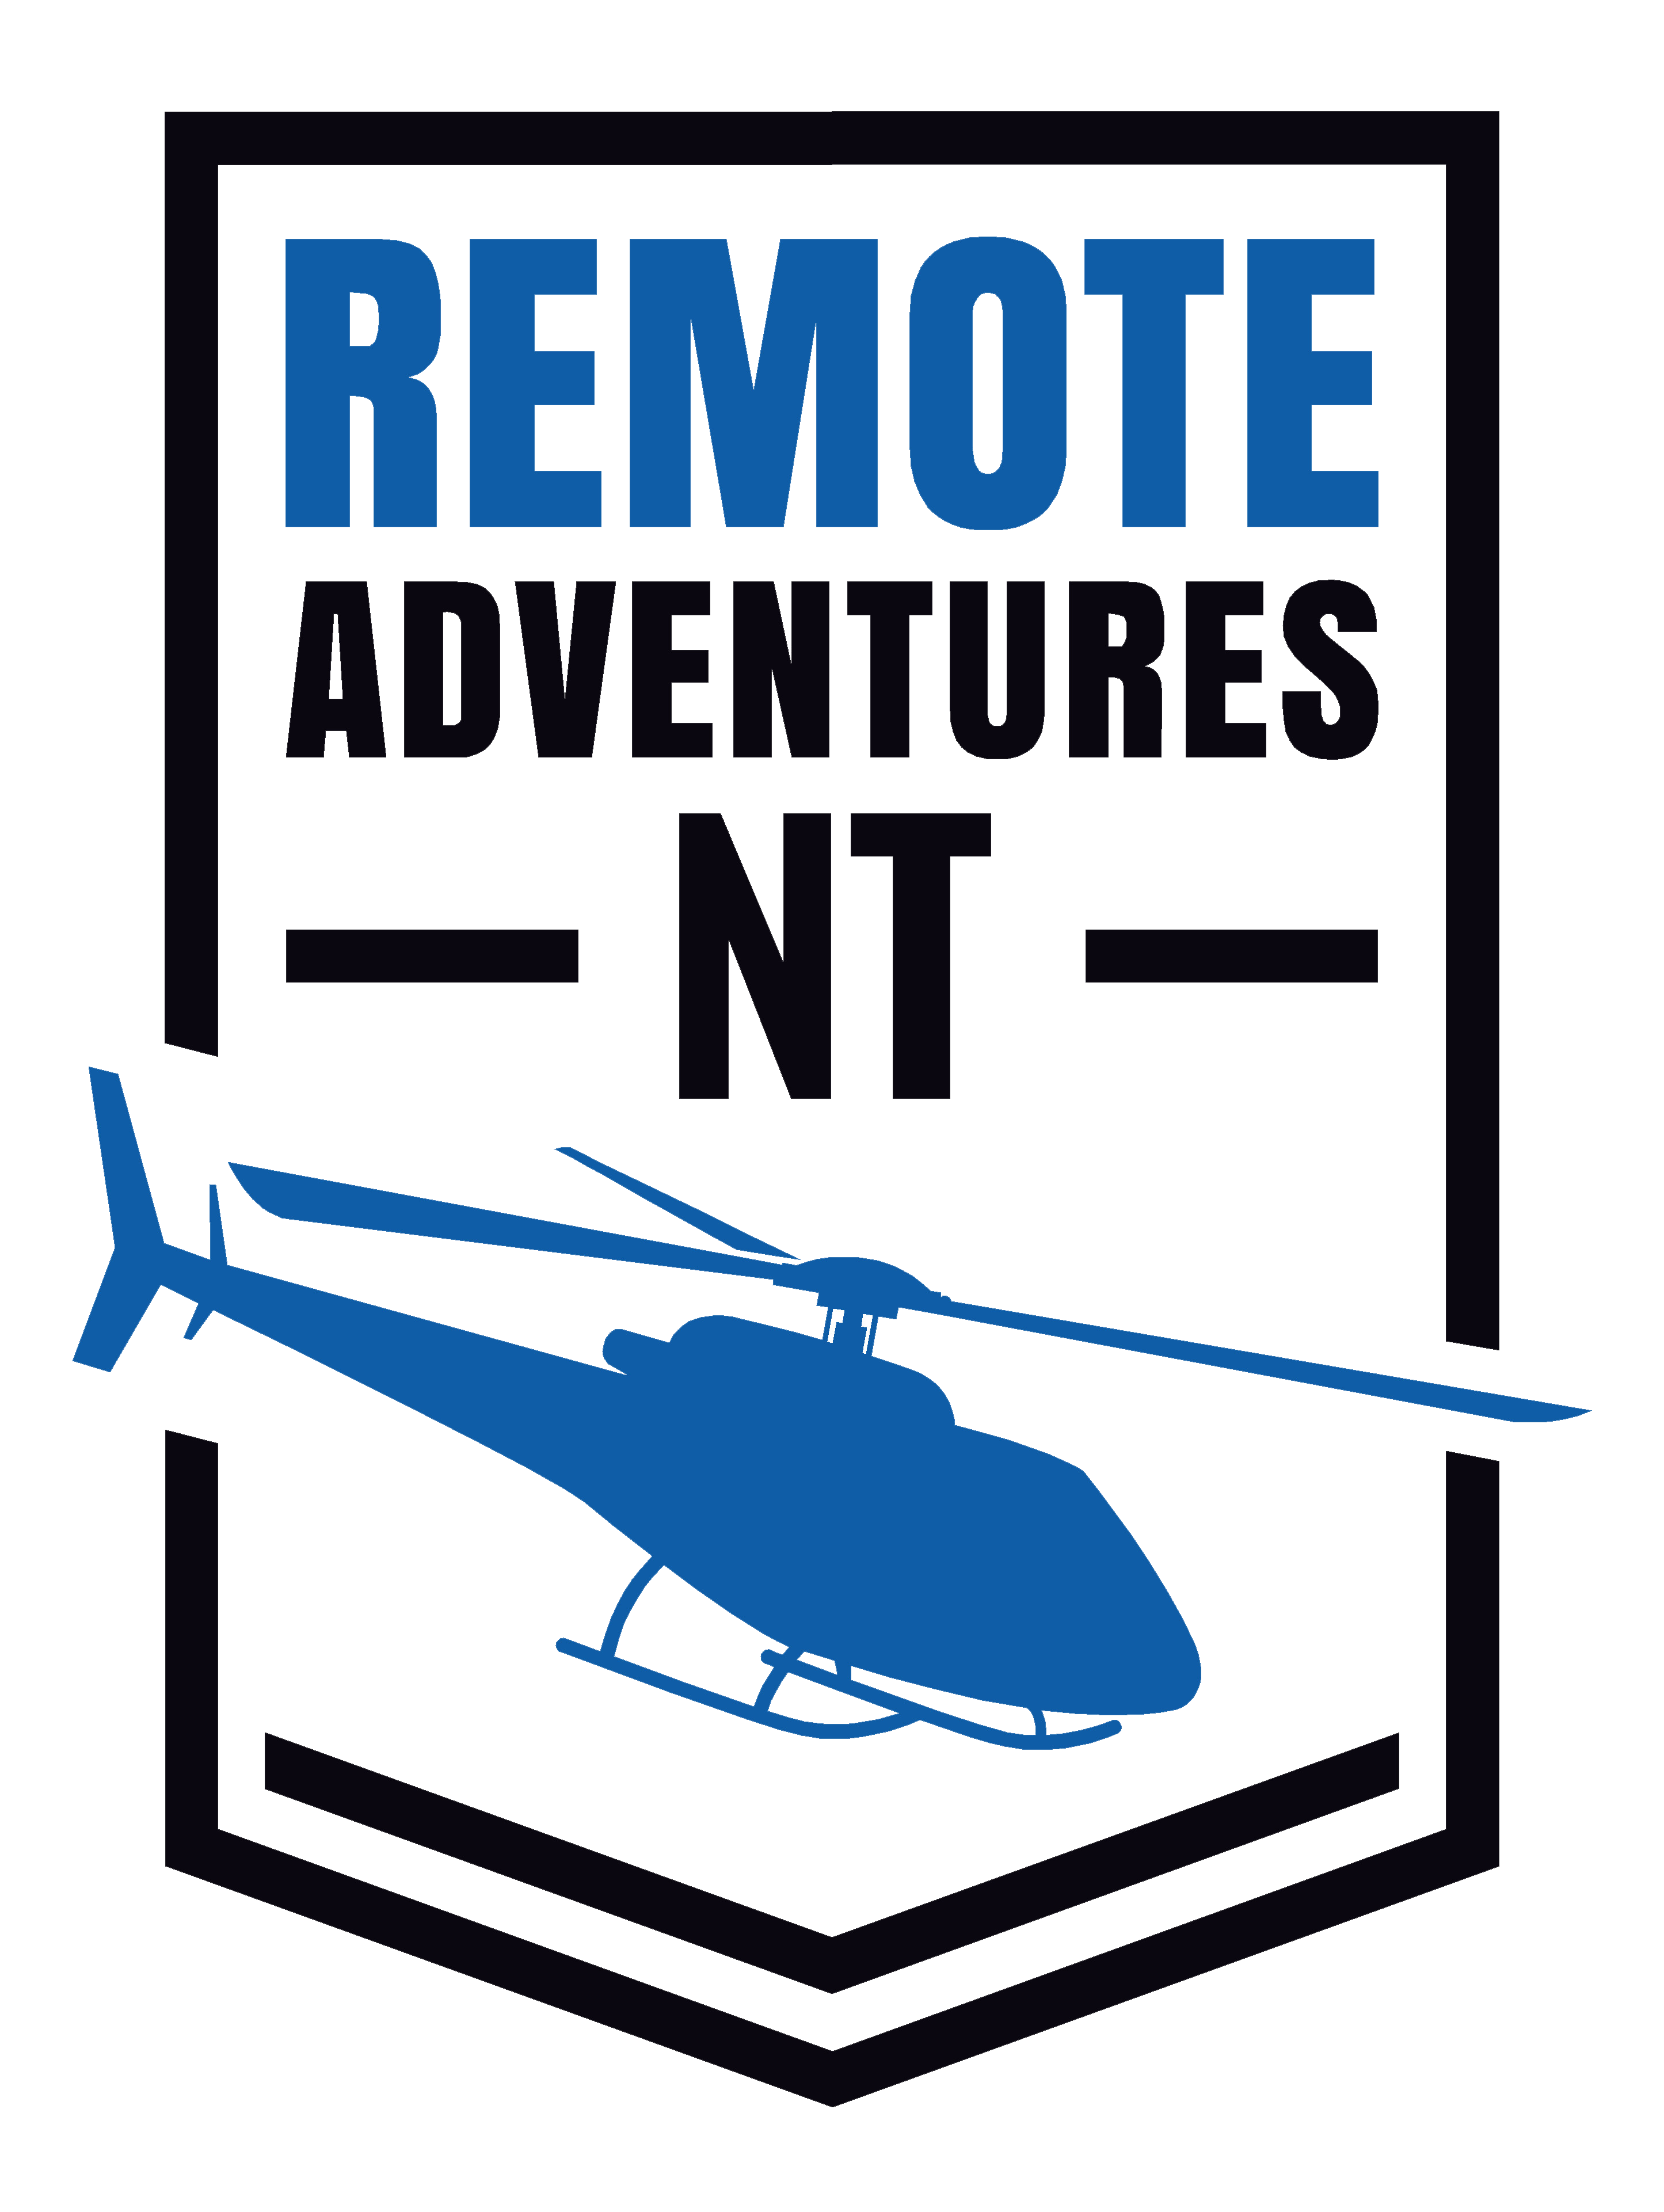 Remote Adventures NT